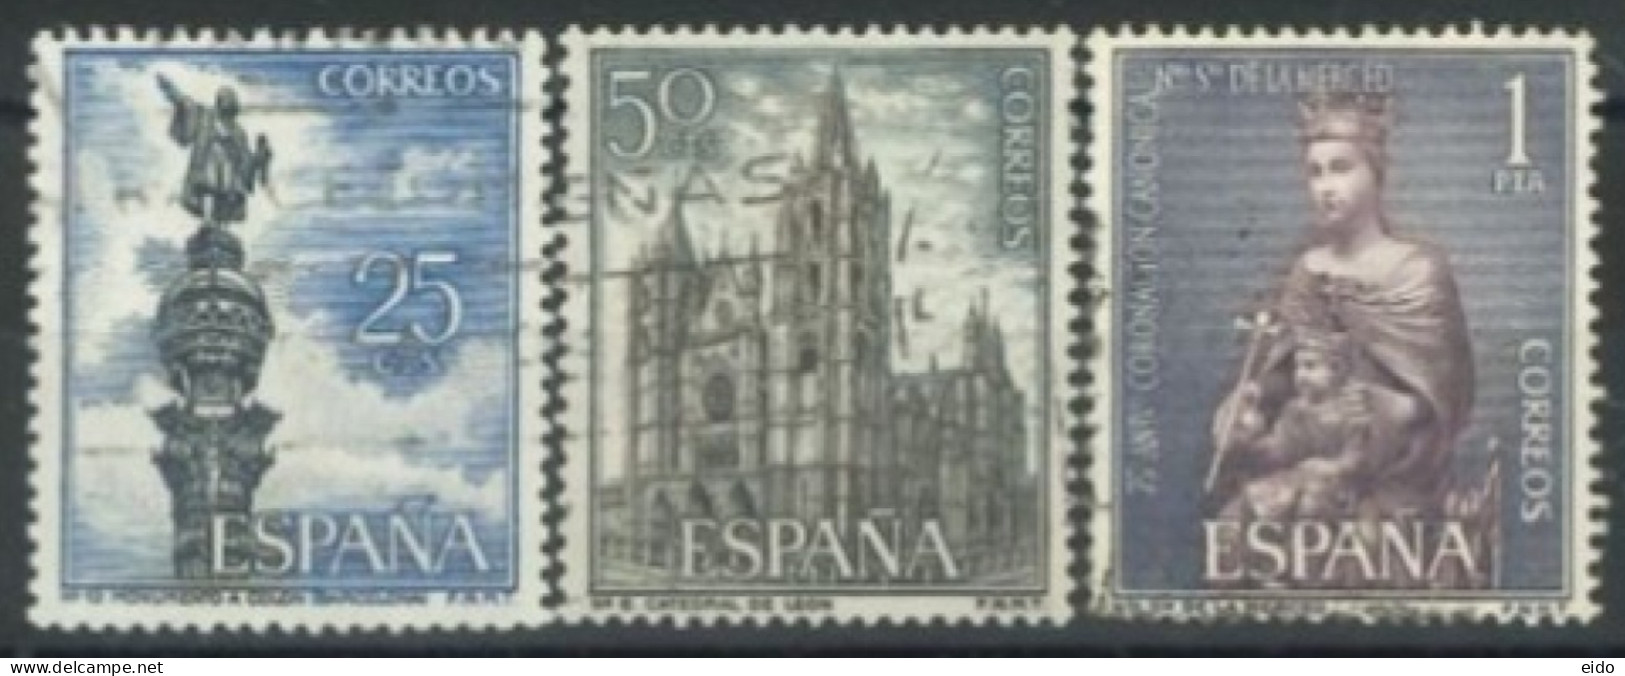 SPAIN, 1963/65, COLUMBUS MONUMENT, LEON CATHEDRAL & ST. DE LA MERCED STAMPS SET OF 3, # 1280,1201,& 1205, USED. - Gebruikt